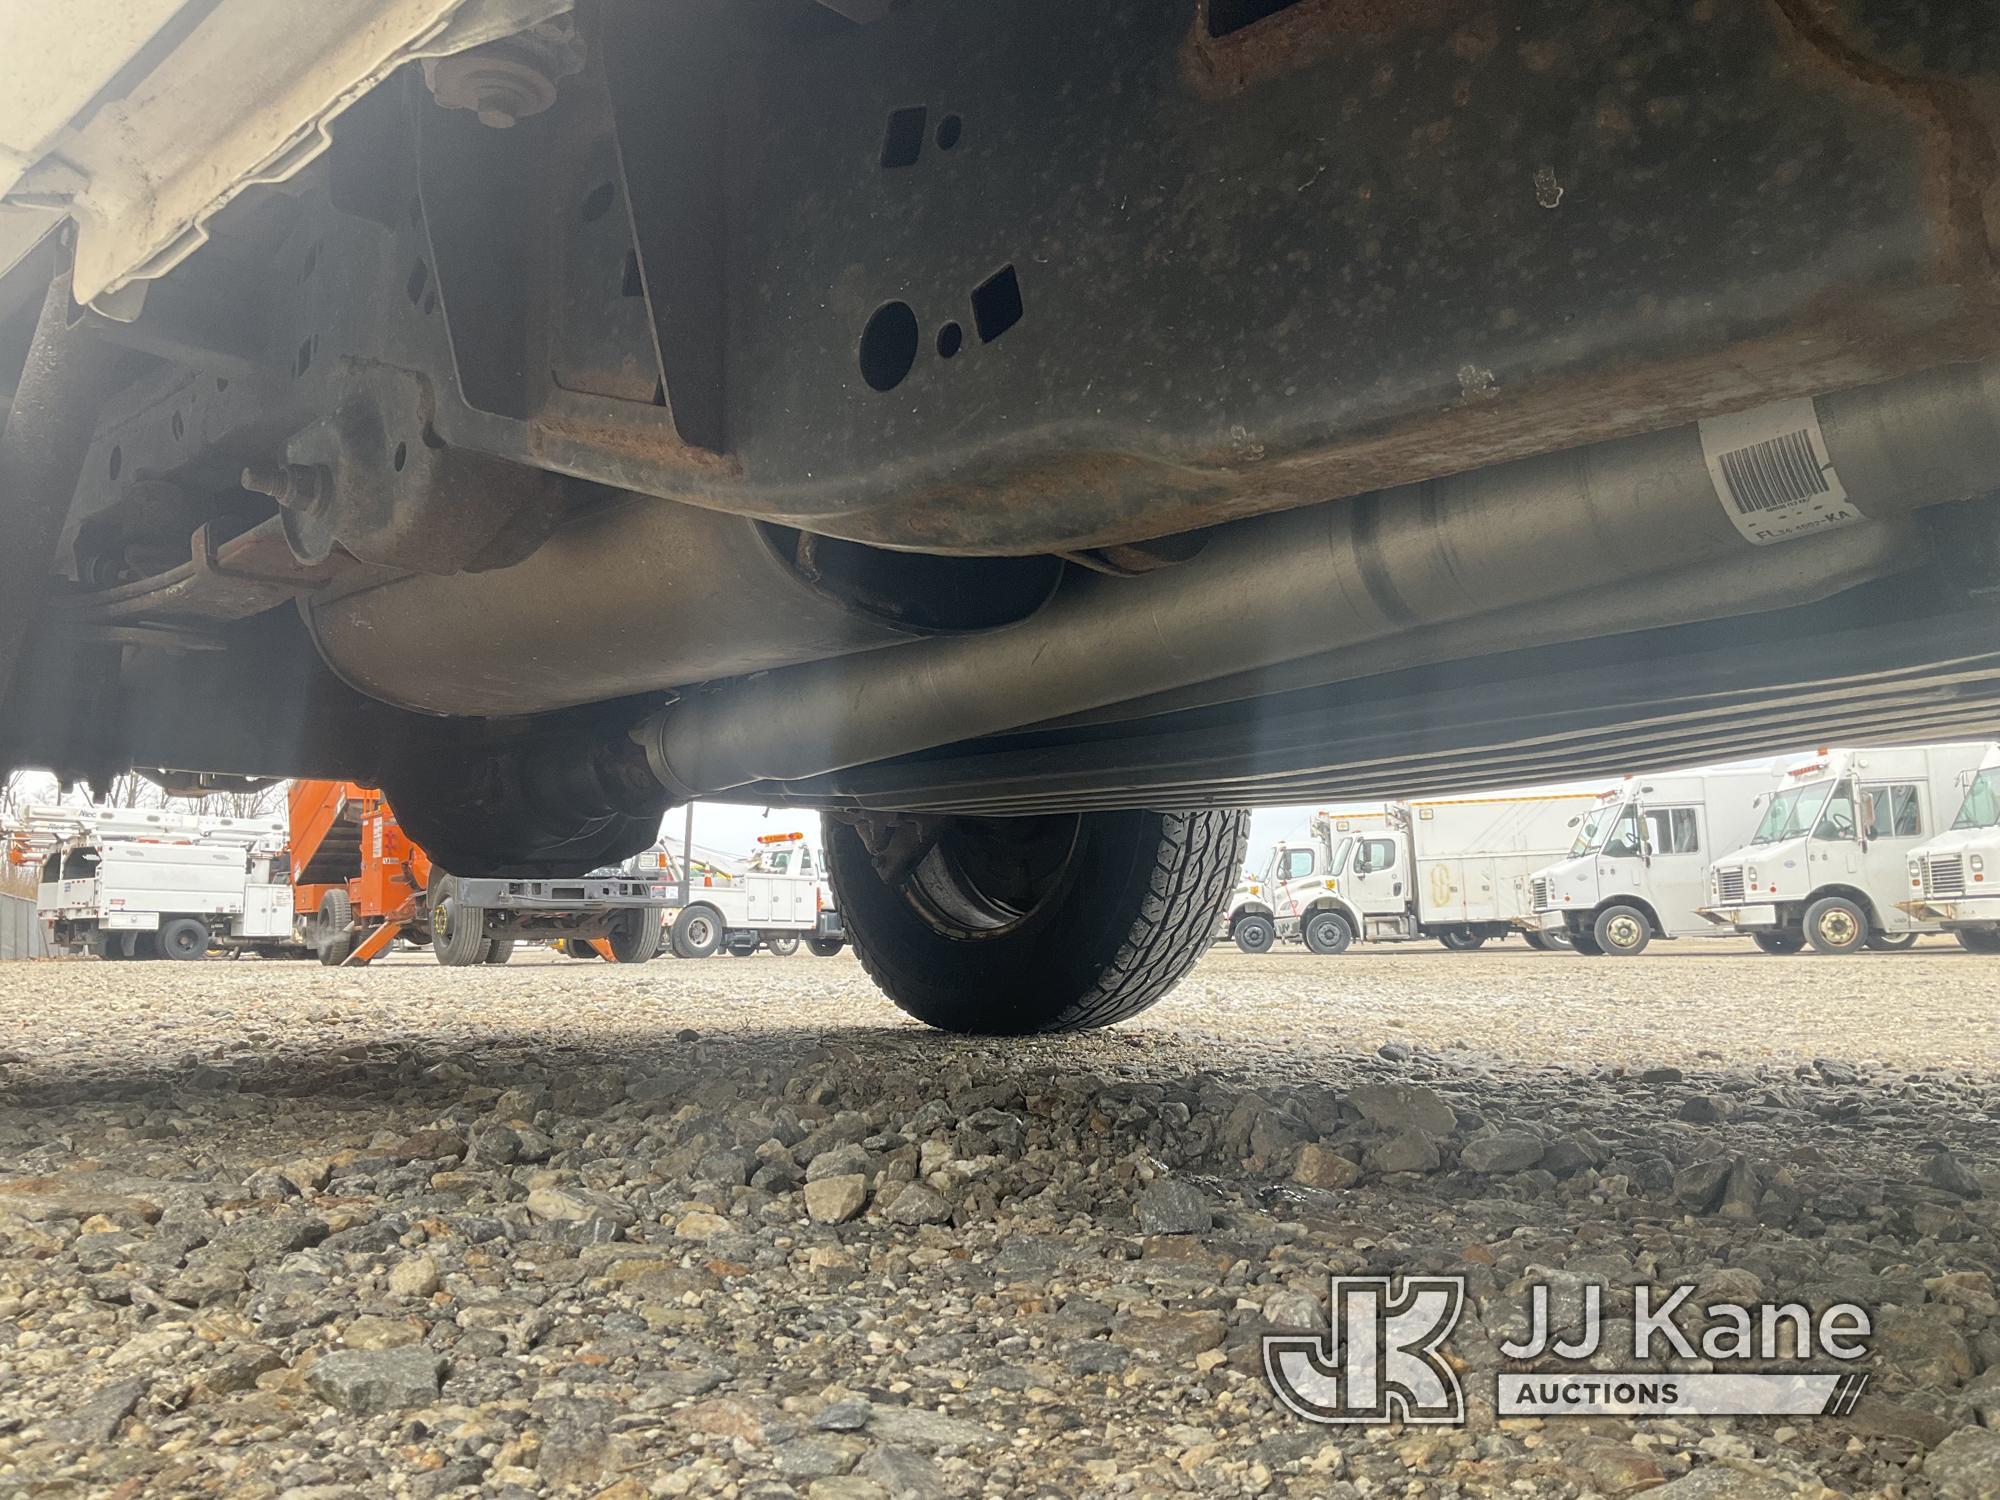 (Shrewsbury, MA) 2015 Ford F150 4x4 Extended-Cab Pickup Truck Runs & Moves) (Body & Rust Damage, Mis